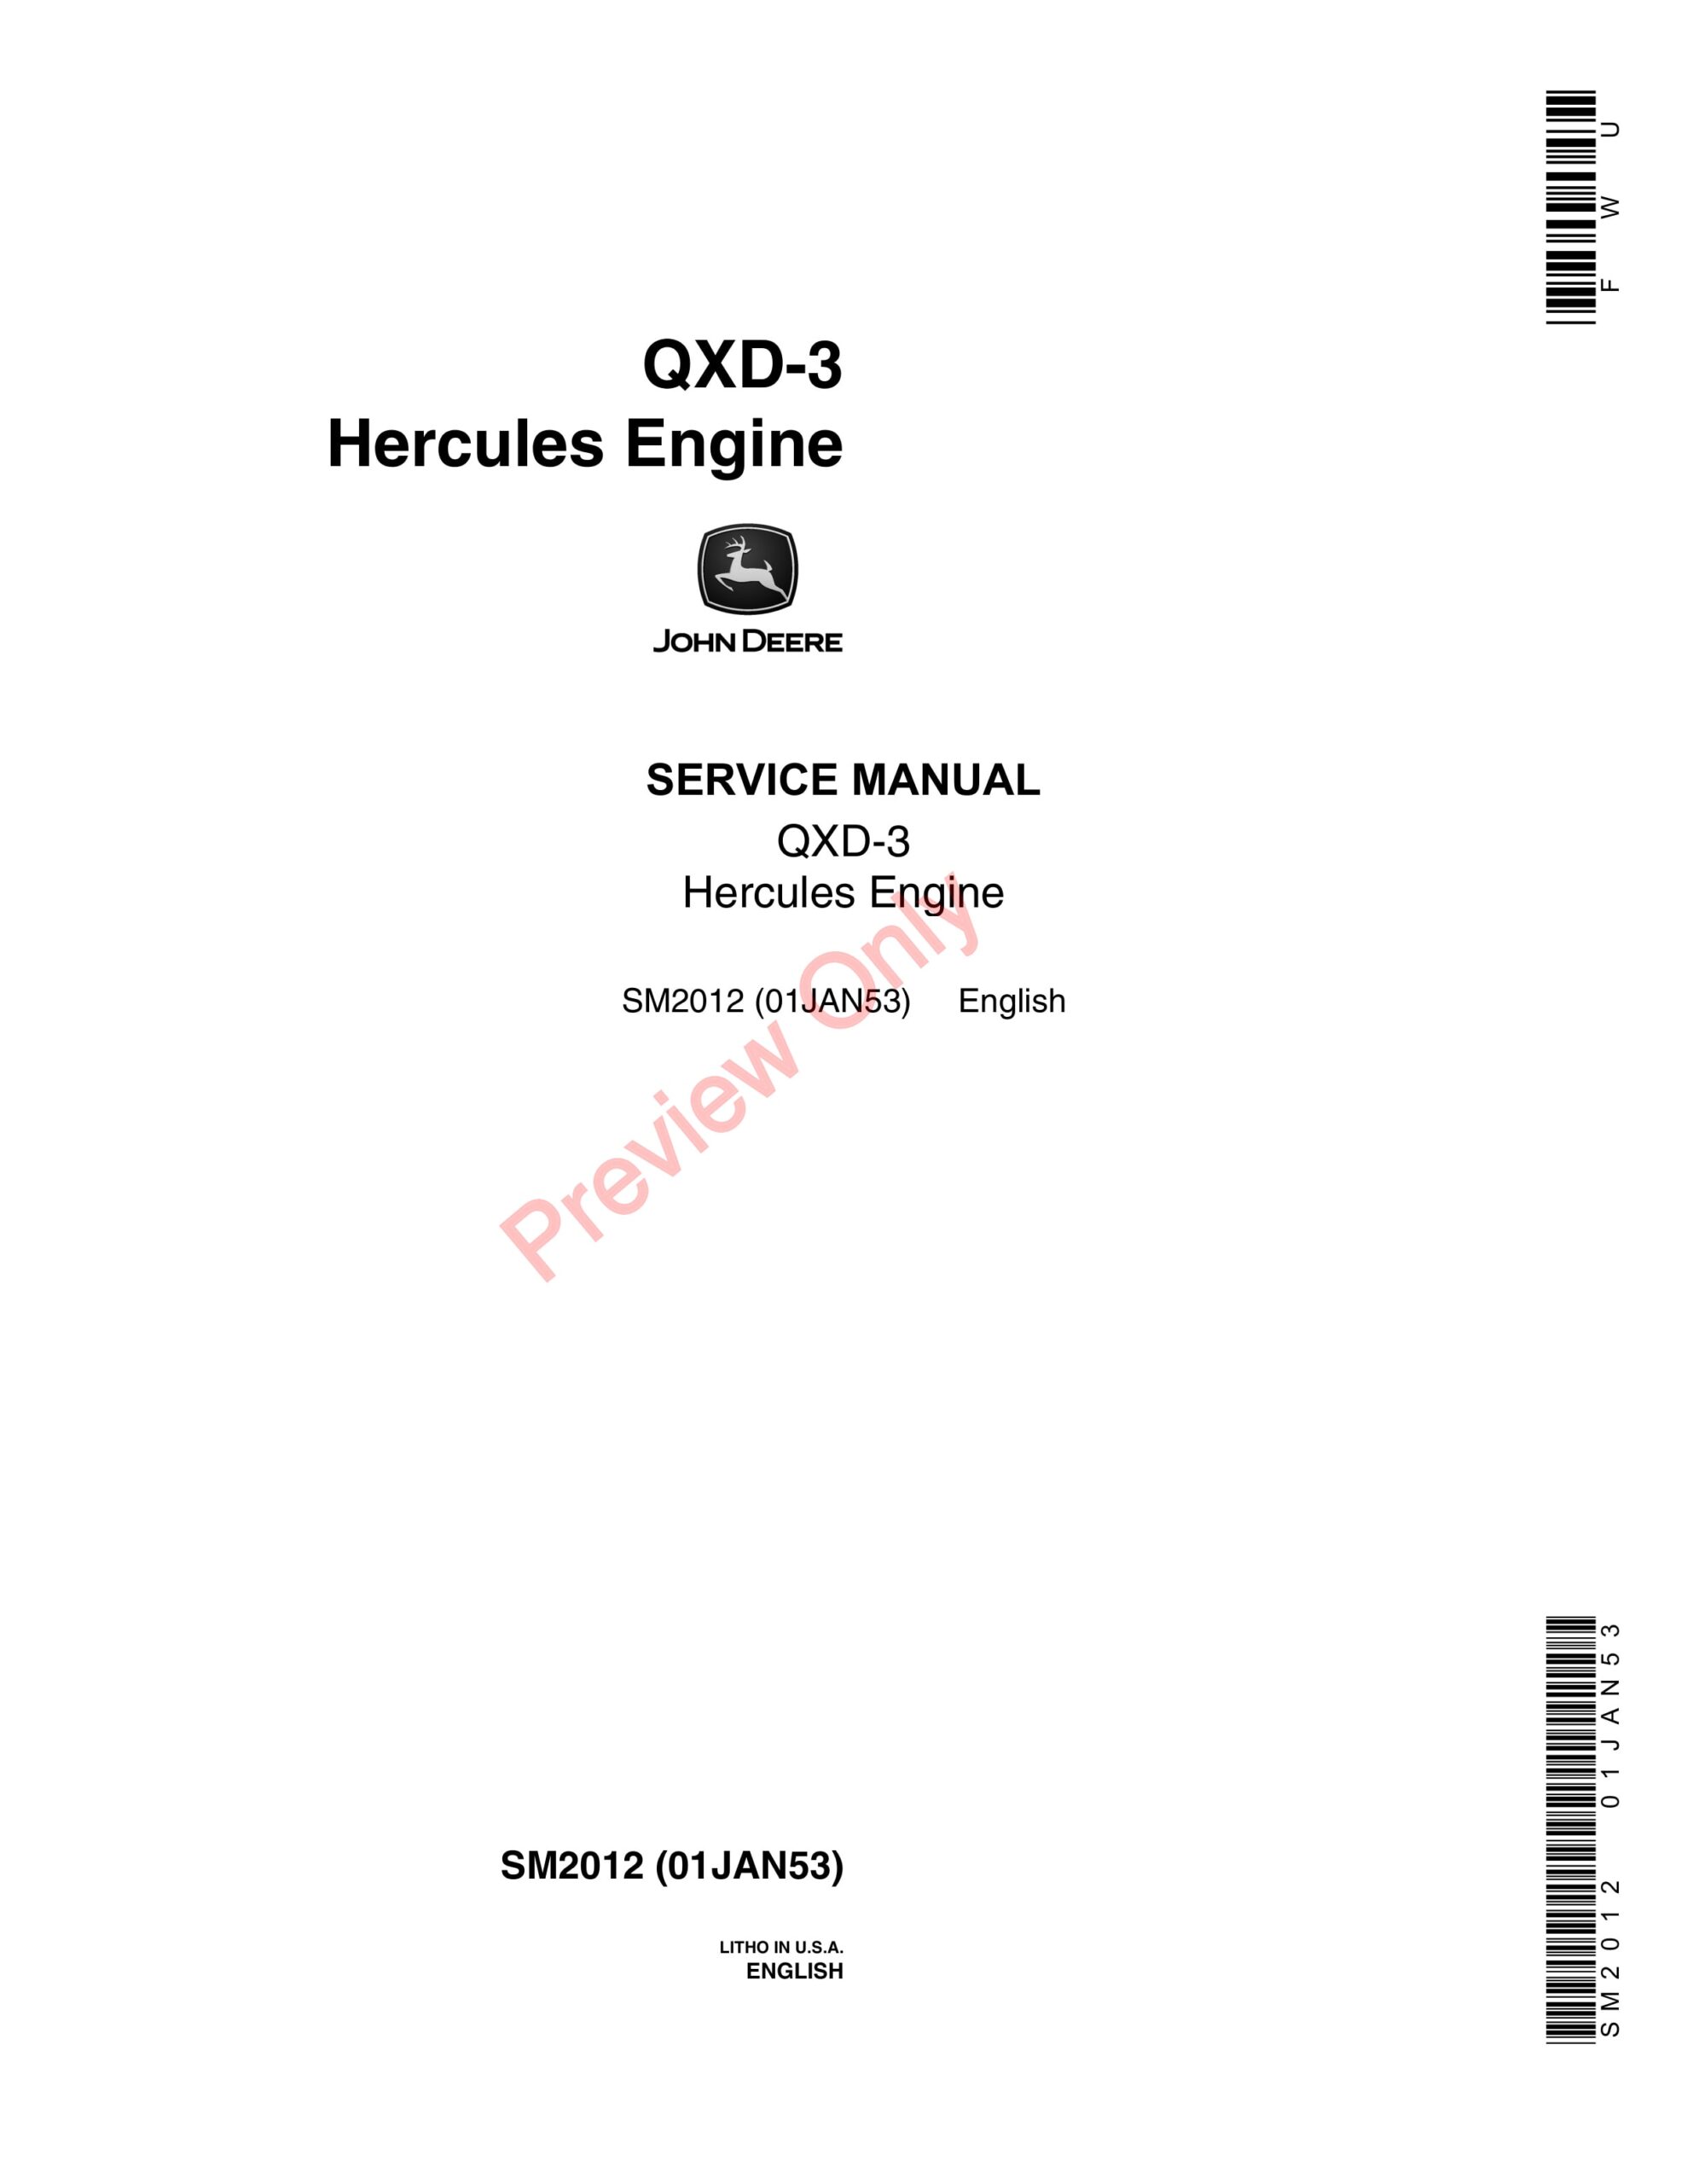 John Deere QXD-3 Hercules Engine Service Manual SM2012 01JAN53-1